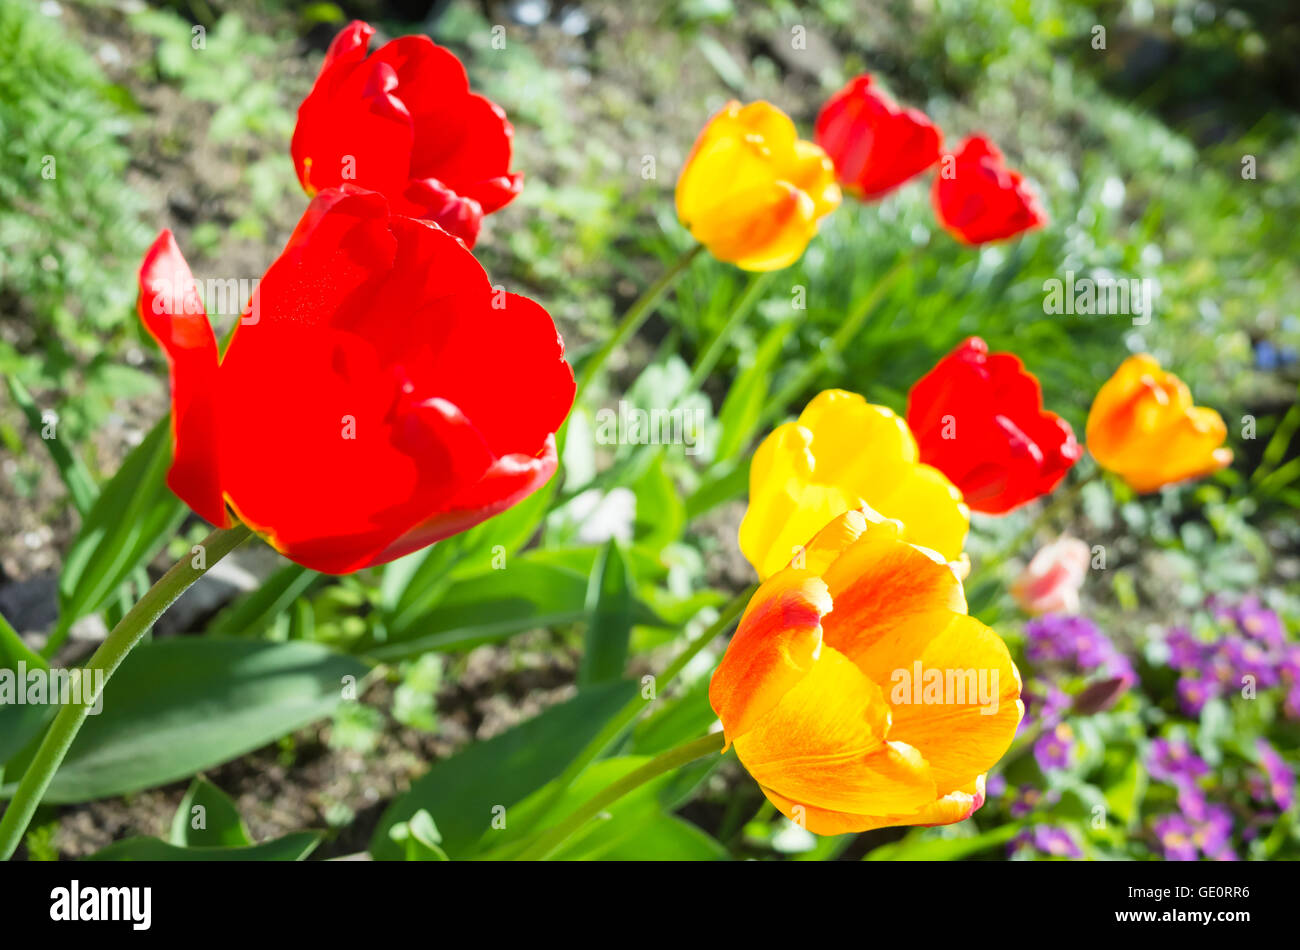 Bunte Tulpen Blumen im Frühling Garten, Nahaufnahme Foto mit selektiven Fokus Stockfoto